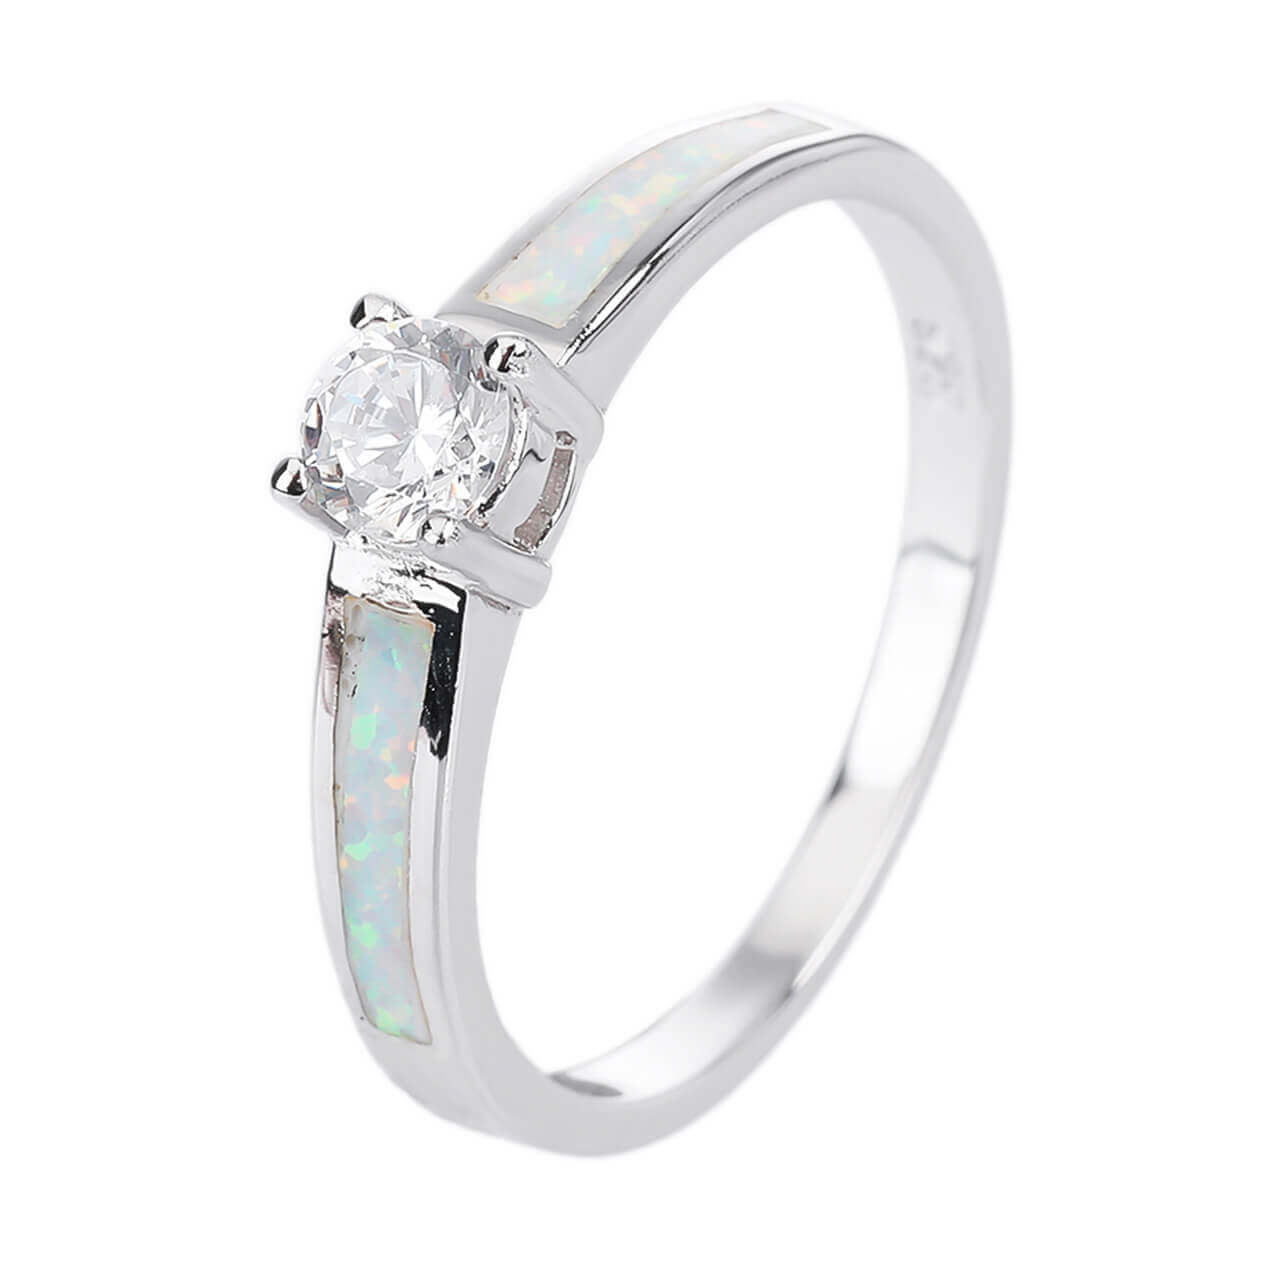 Stříbrný prsten SOLITÉR bílý OPÁL Velikost prstenu: 52 Ag 925/1000